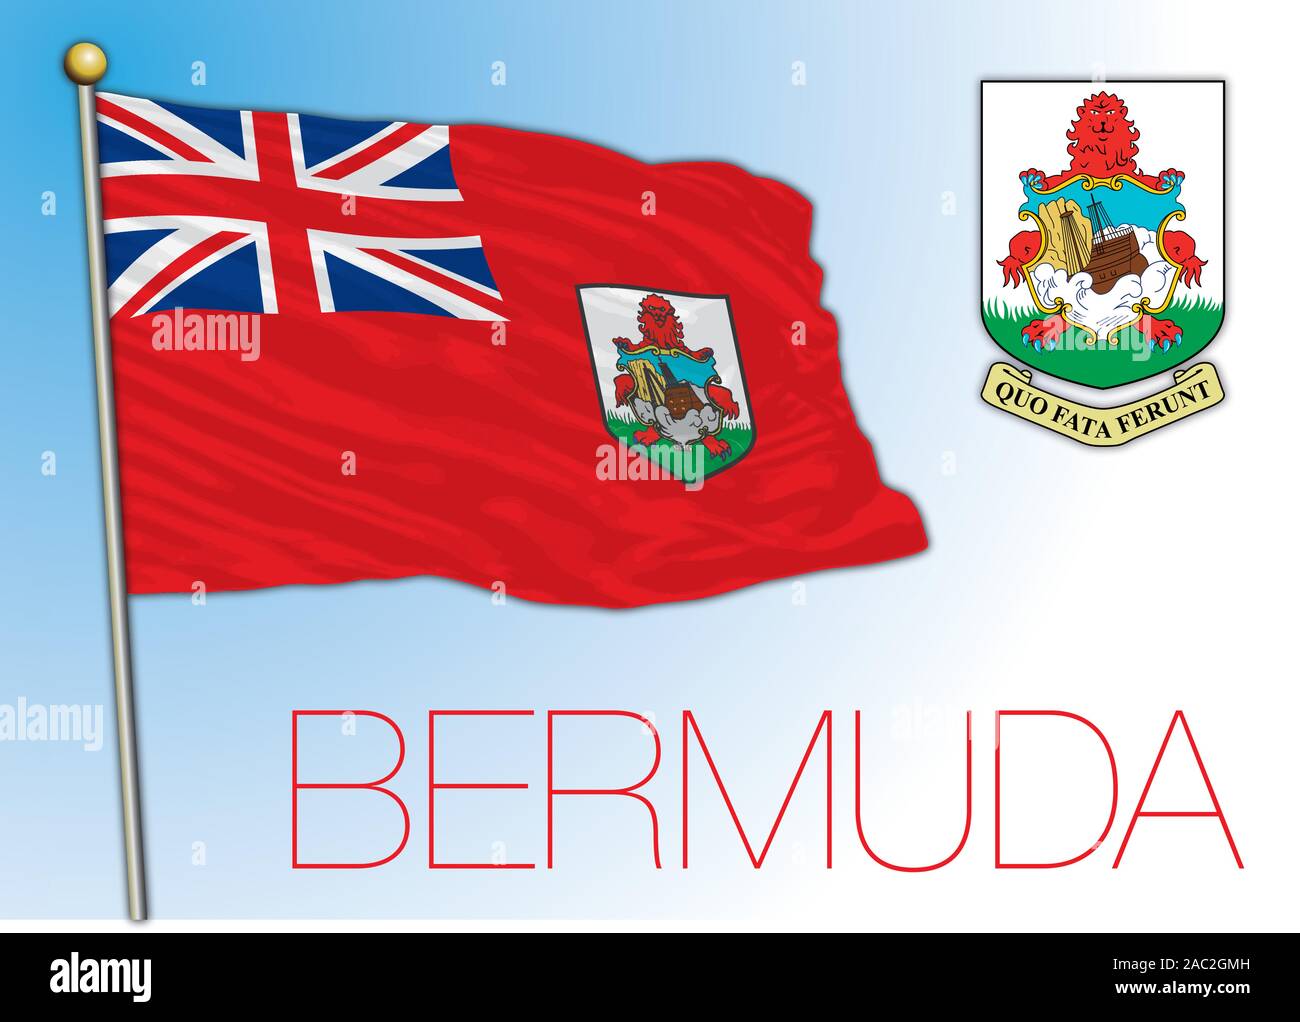 Bermuda island Offizielle und Nationalflagge mit Wappen, Vector Illustration, Mittelamerika Stock Vektor